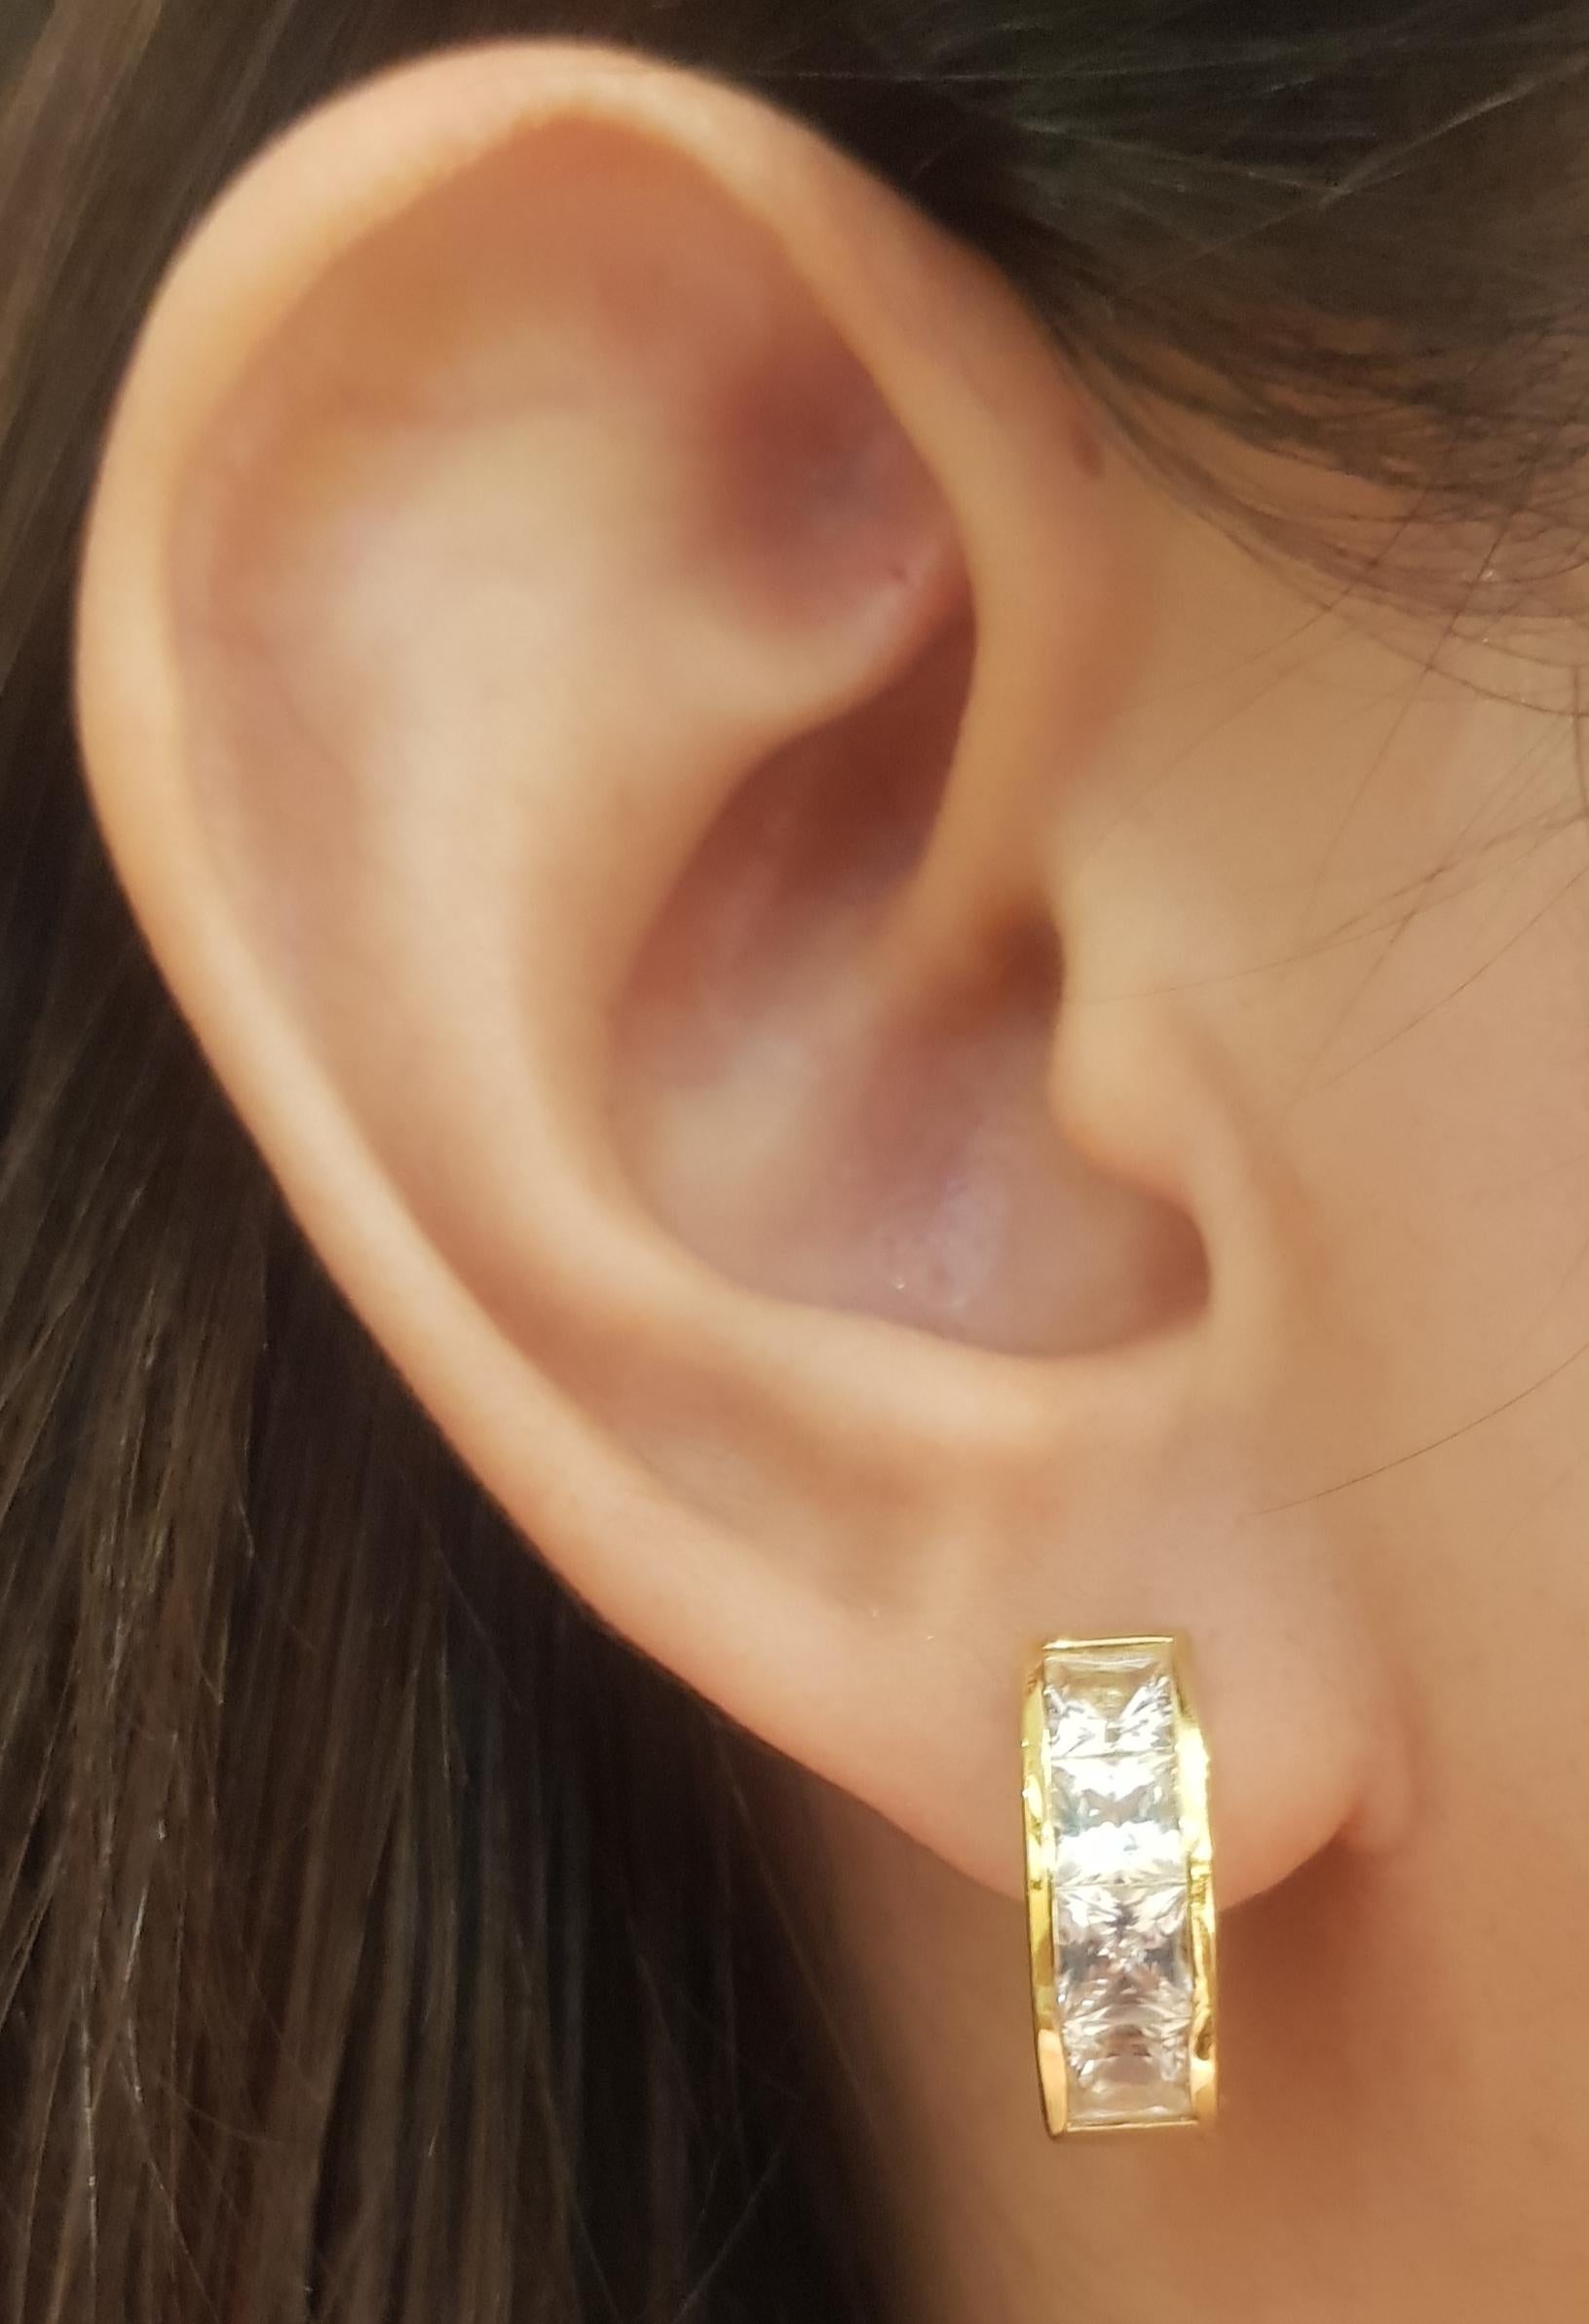 White Sapphire 3.40 carats Earrings set in 18 Karat Gold Settings

Width:   0.50 cm 
Length:  1.60 cm
Total Weight: 9.98 grams

